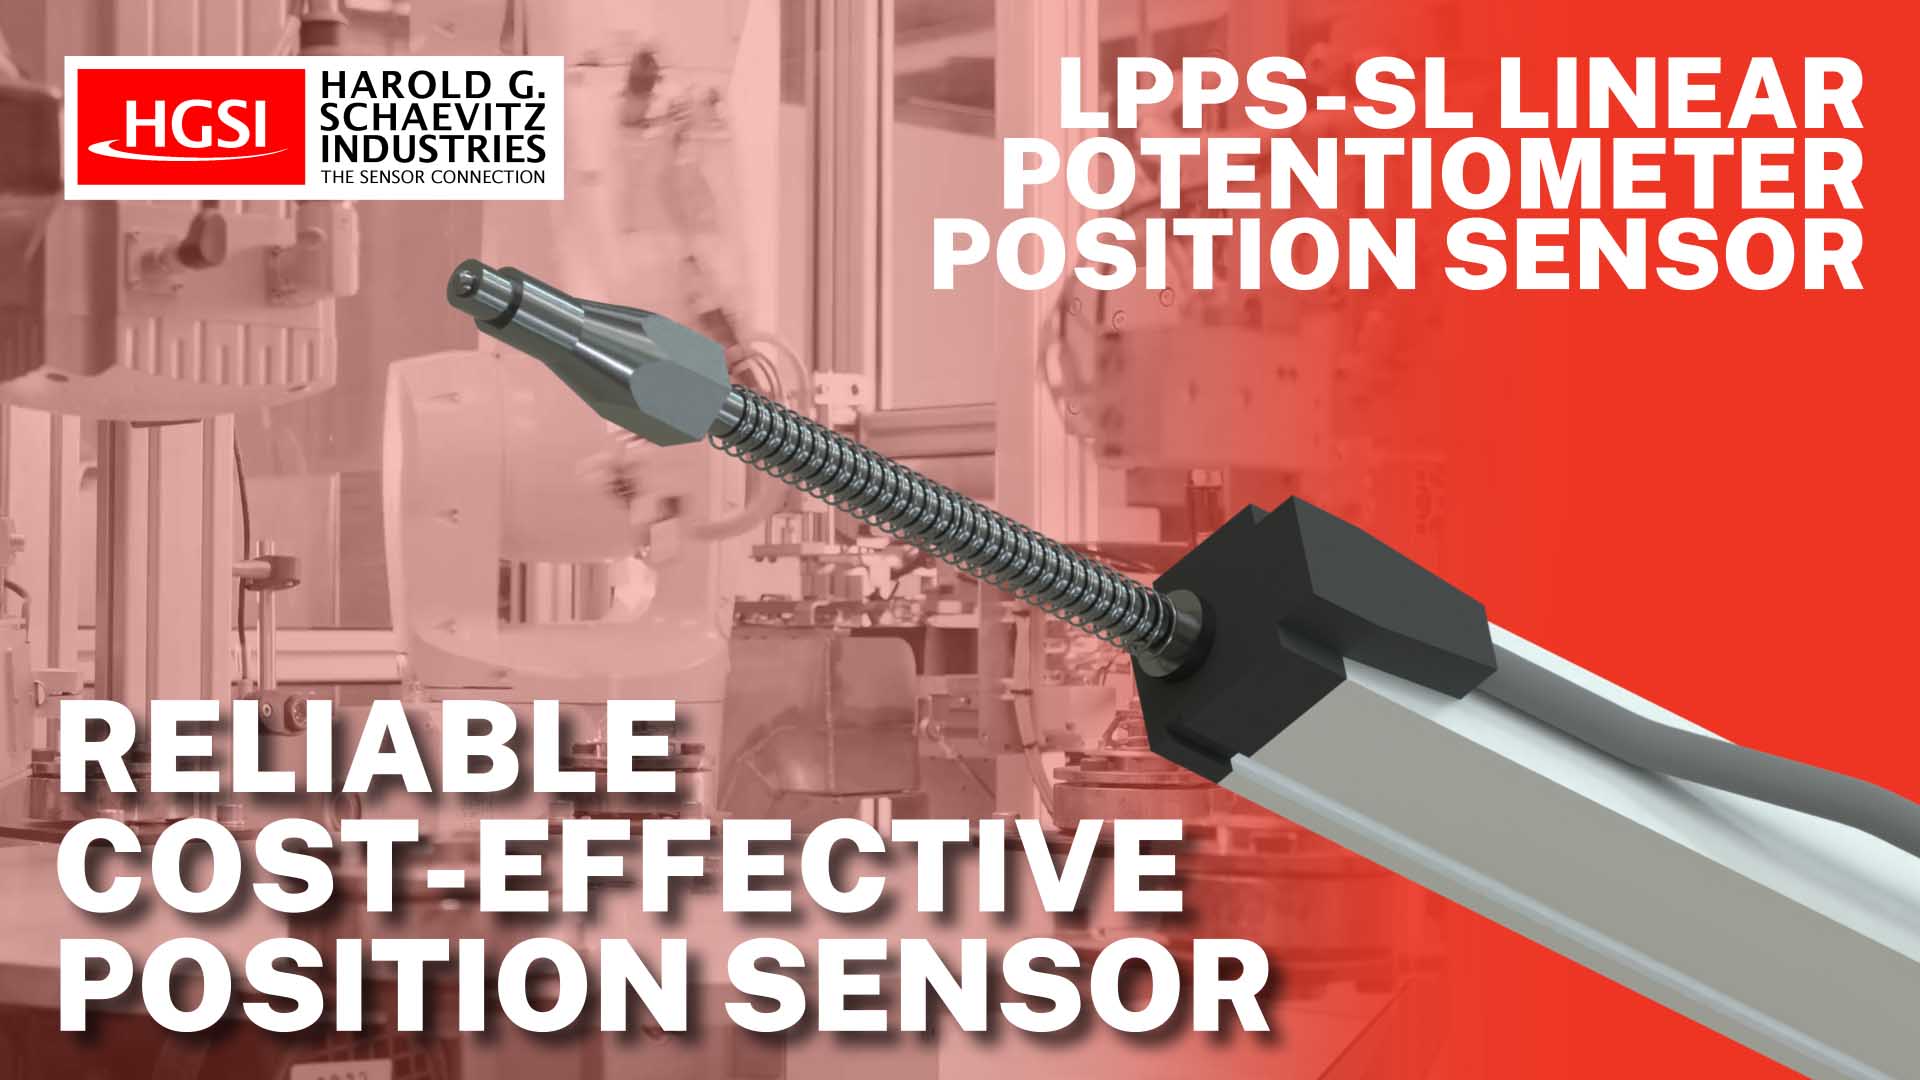 Overview of LPPS-SL Series Linear Potentiometer Position Sensor